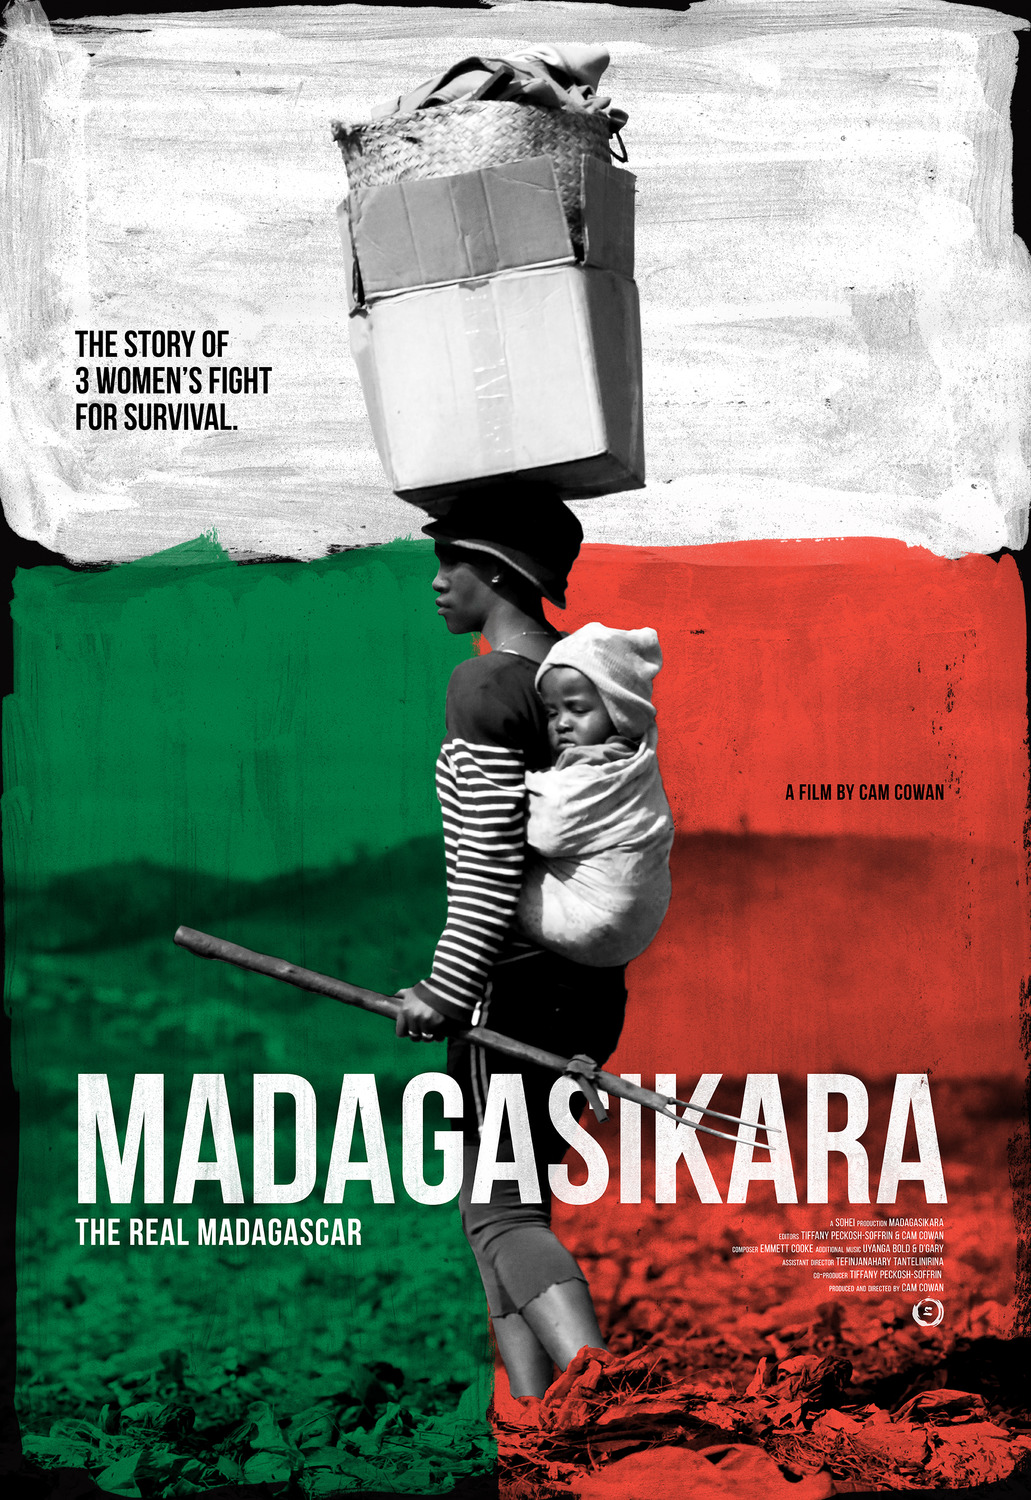 Extra Large Movie Poster Image for Madagasikara 